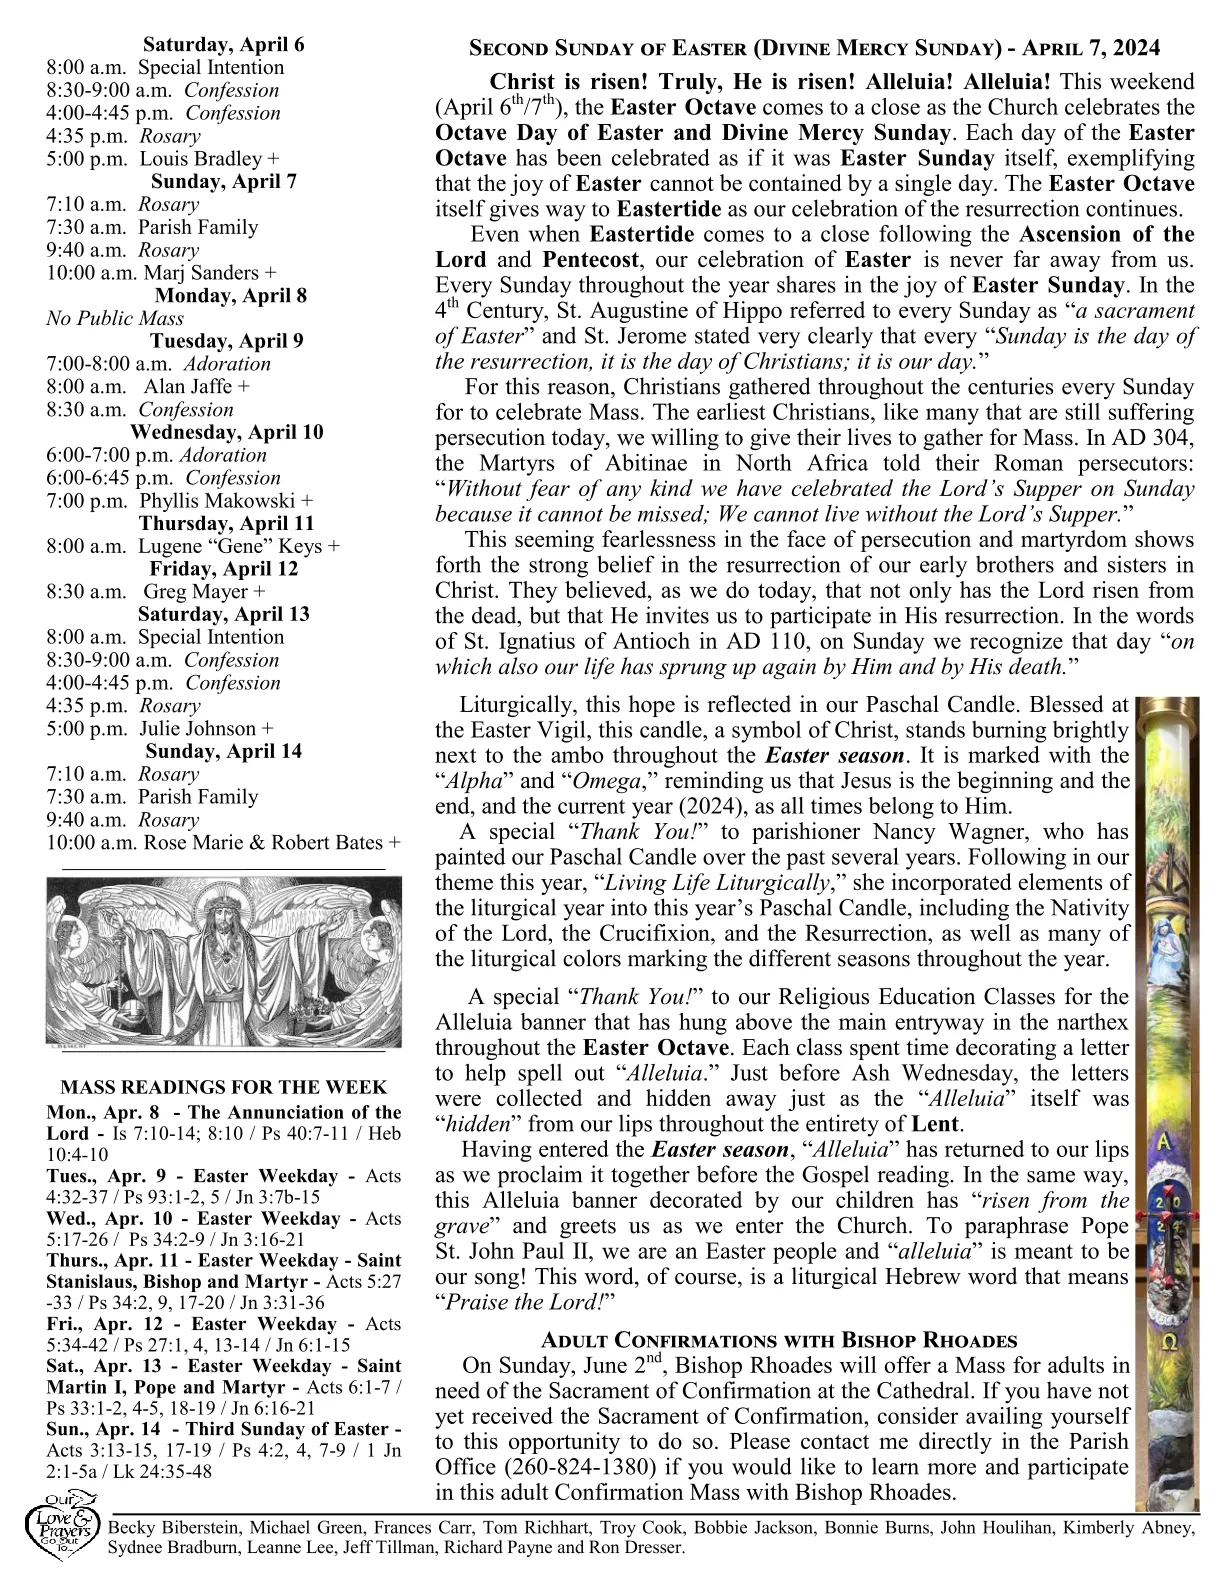 Apr 07, 2024 - Bulletin - Page 2